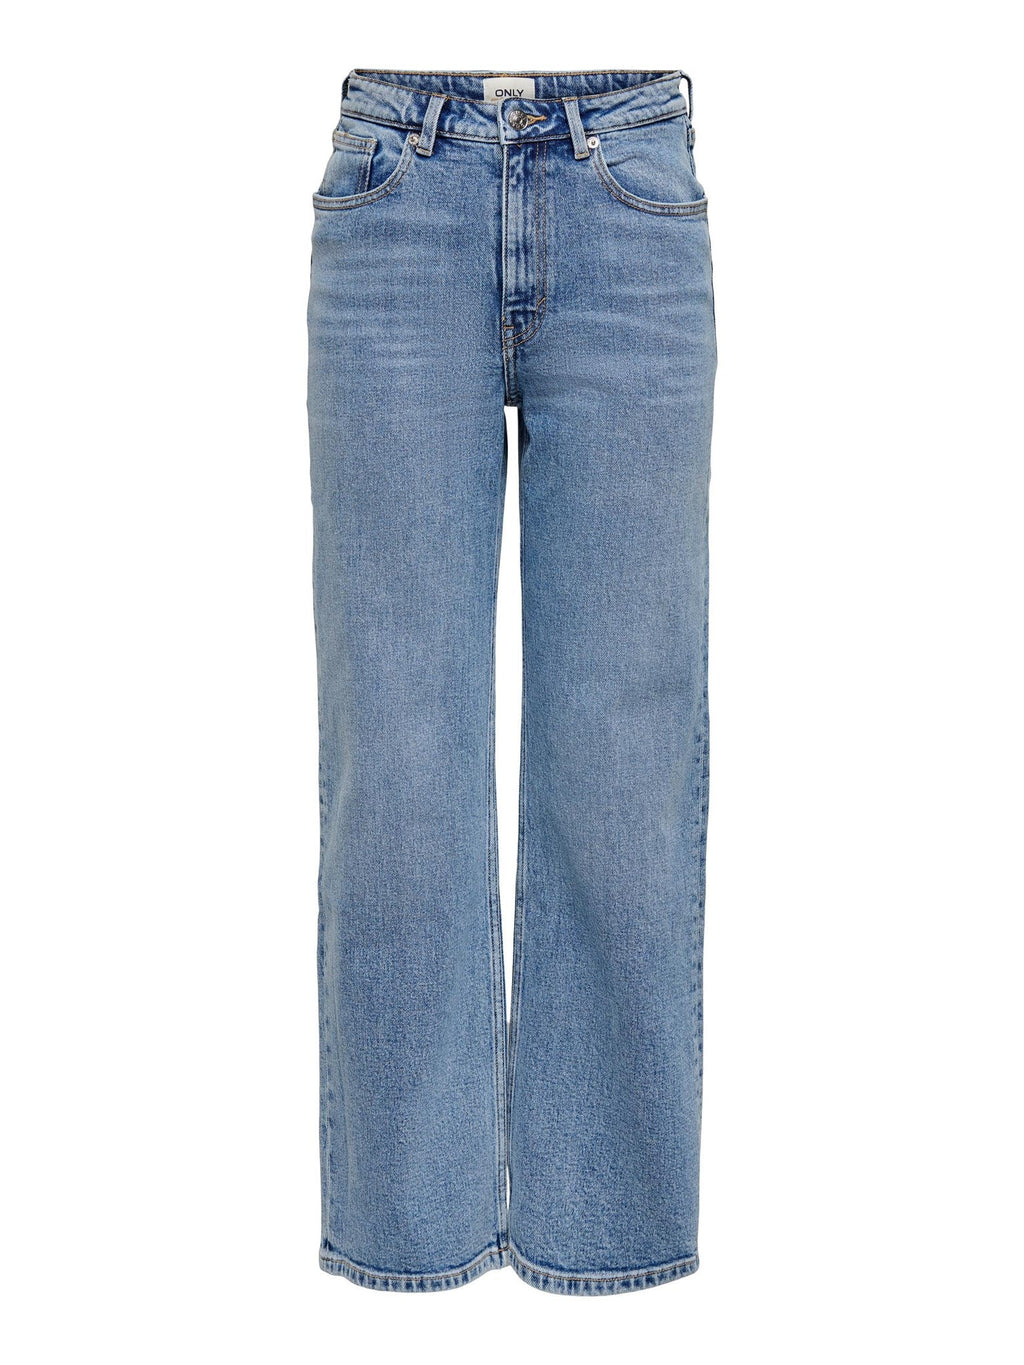 Jeans jugosos (pierna ancha) - Denim azul